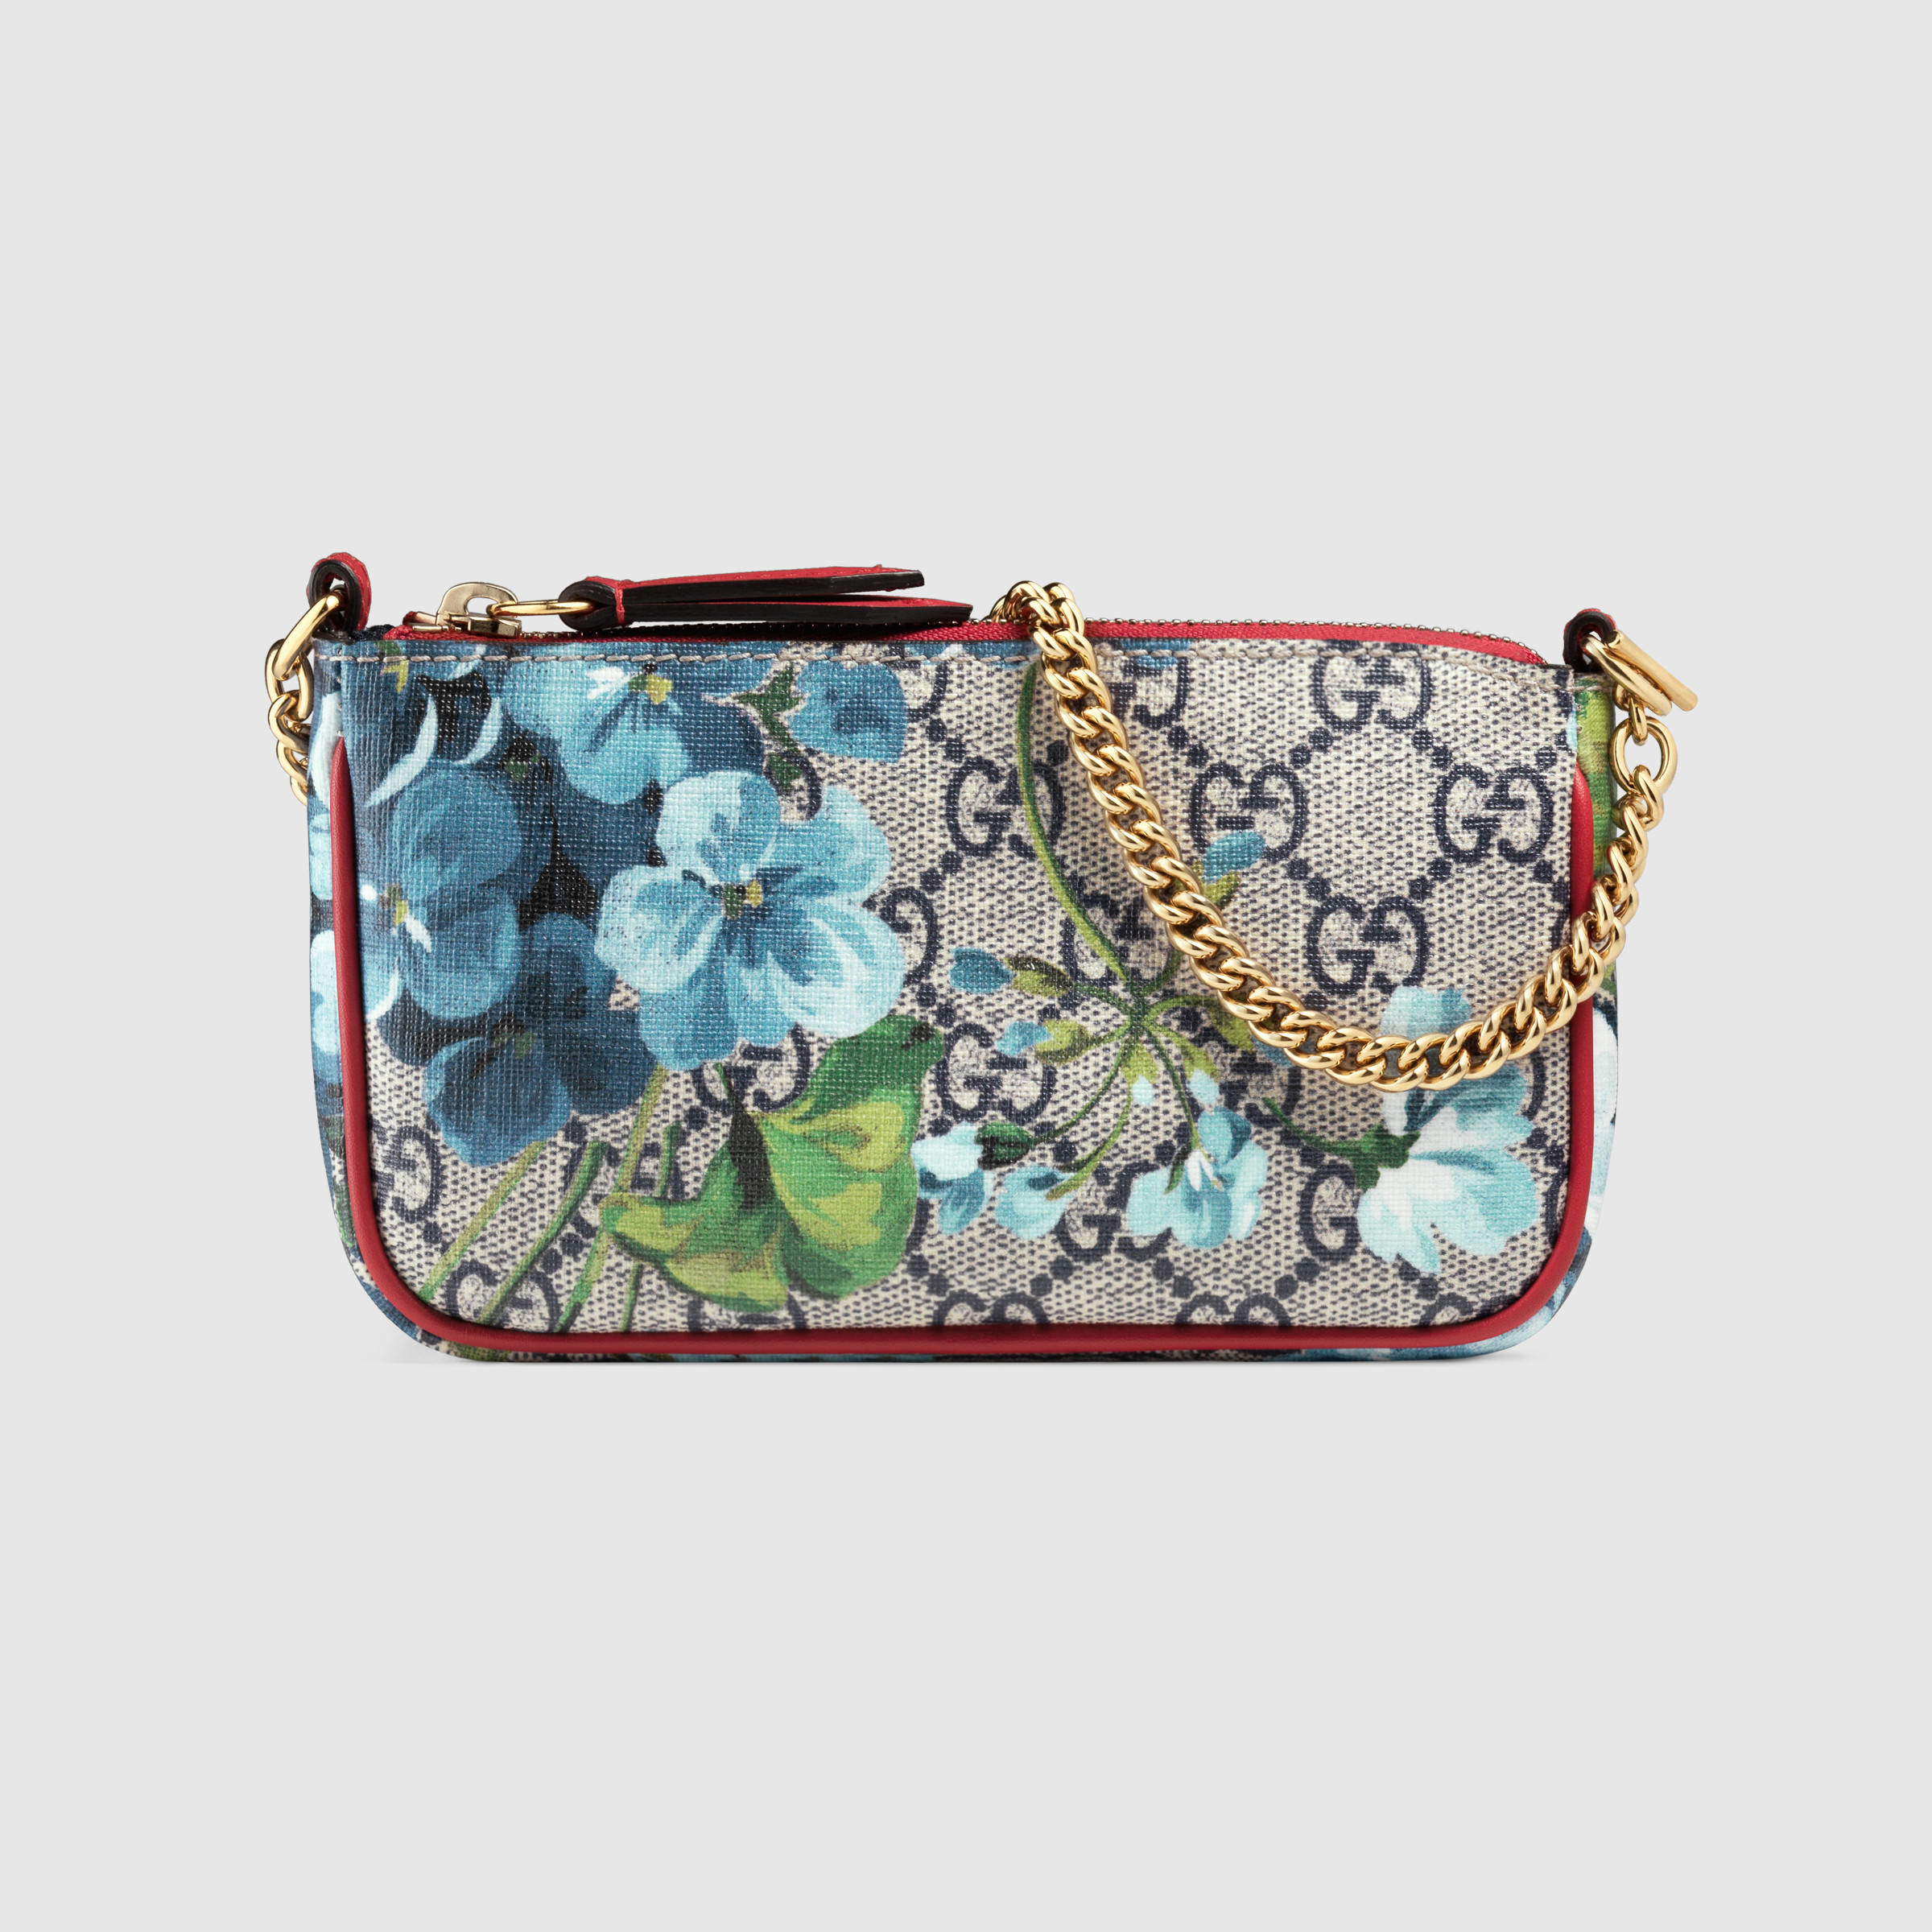 Lyst - Gucci Gg Blooms Mini Chain Bag in Blue